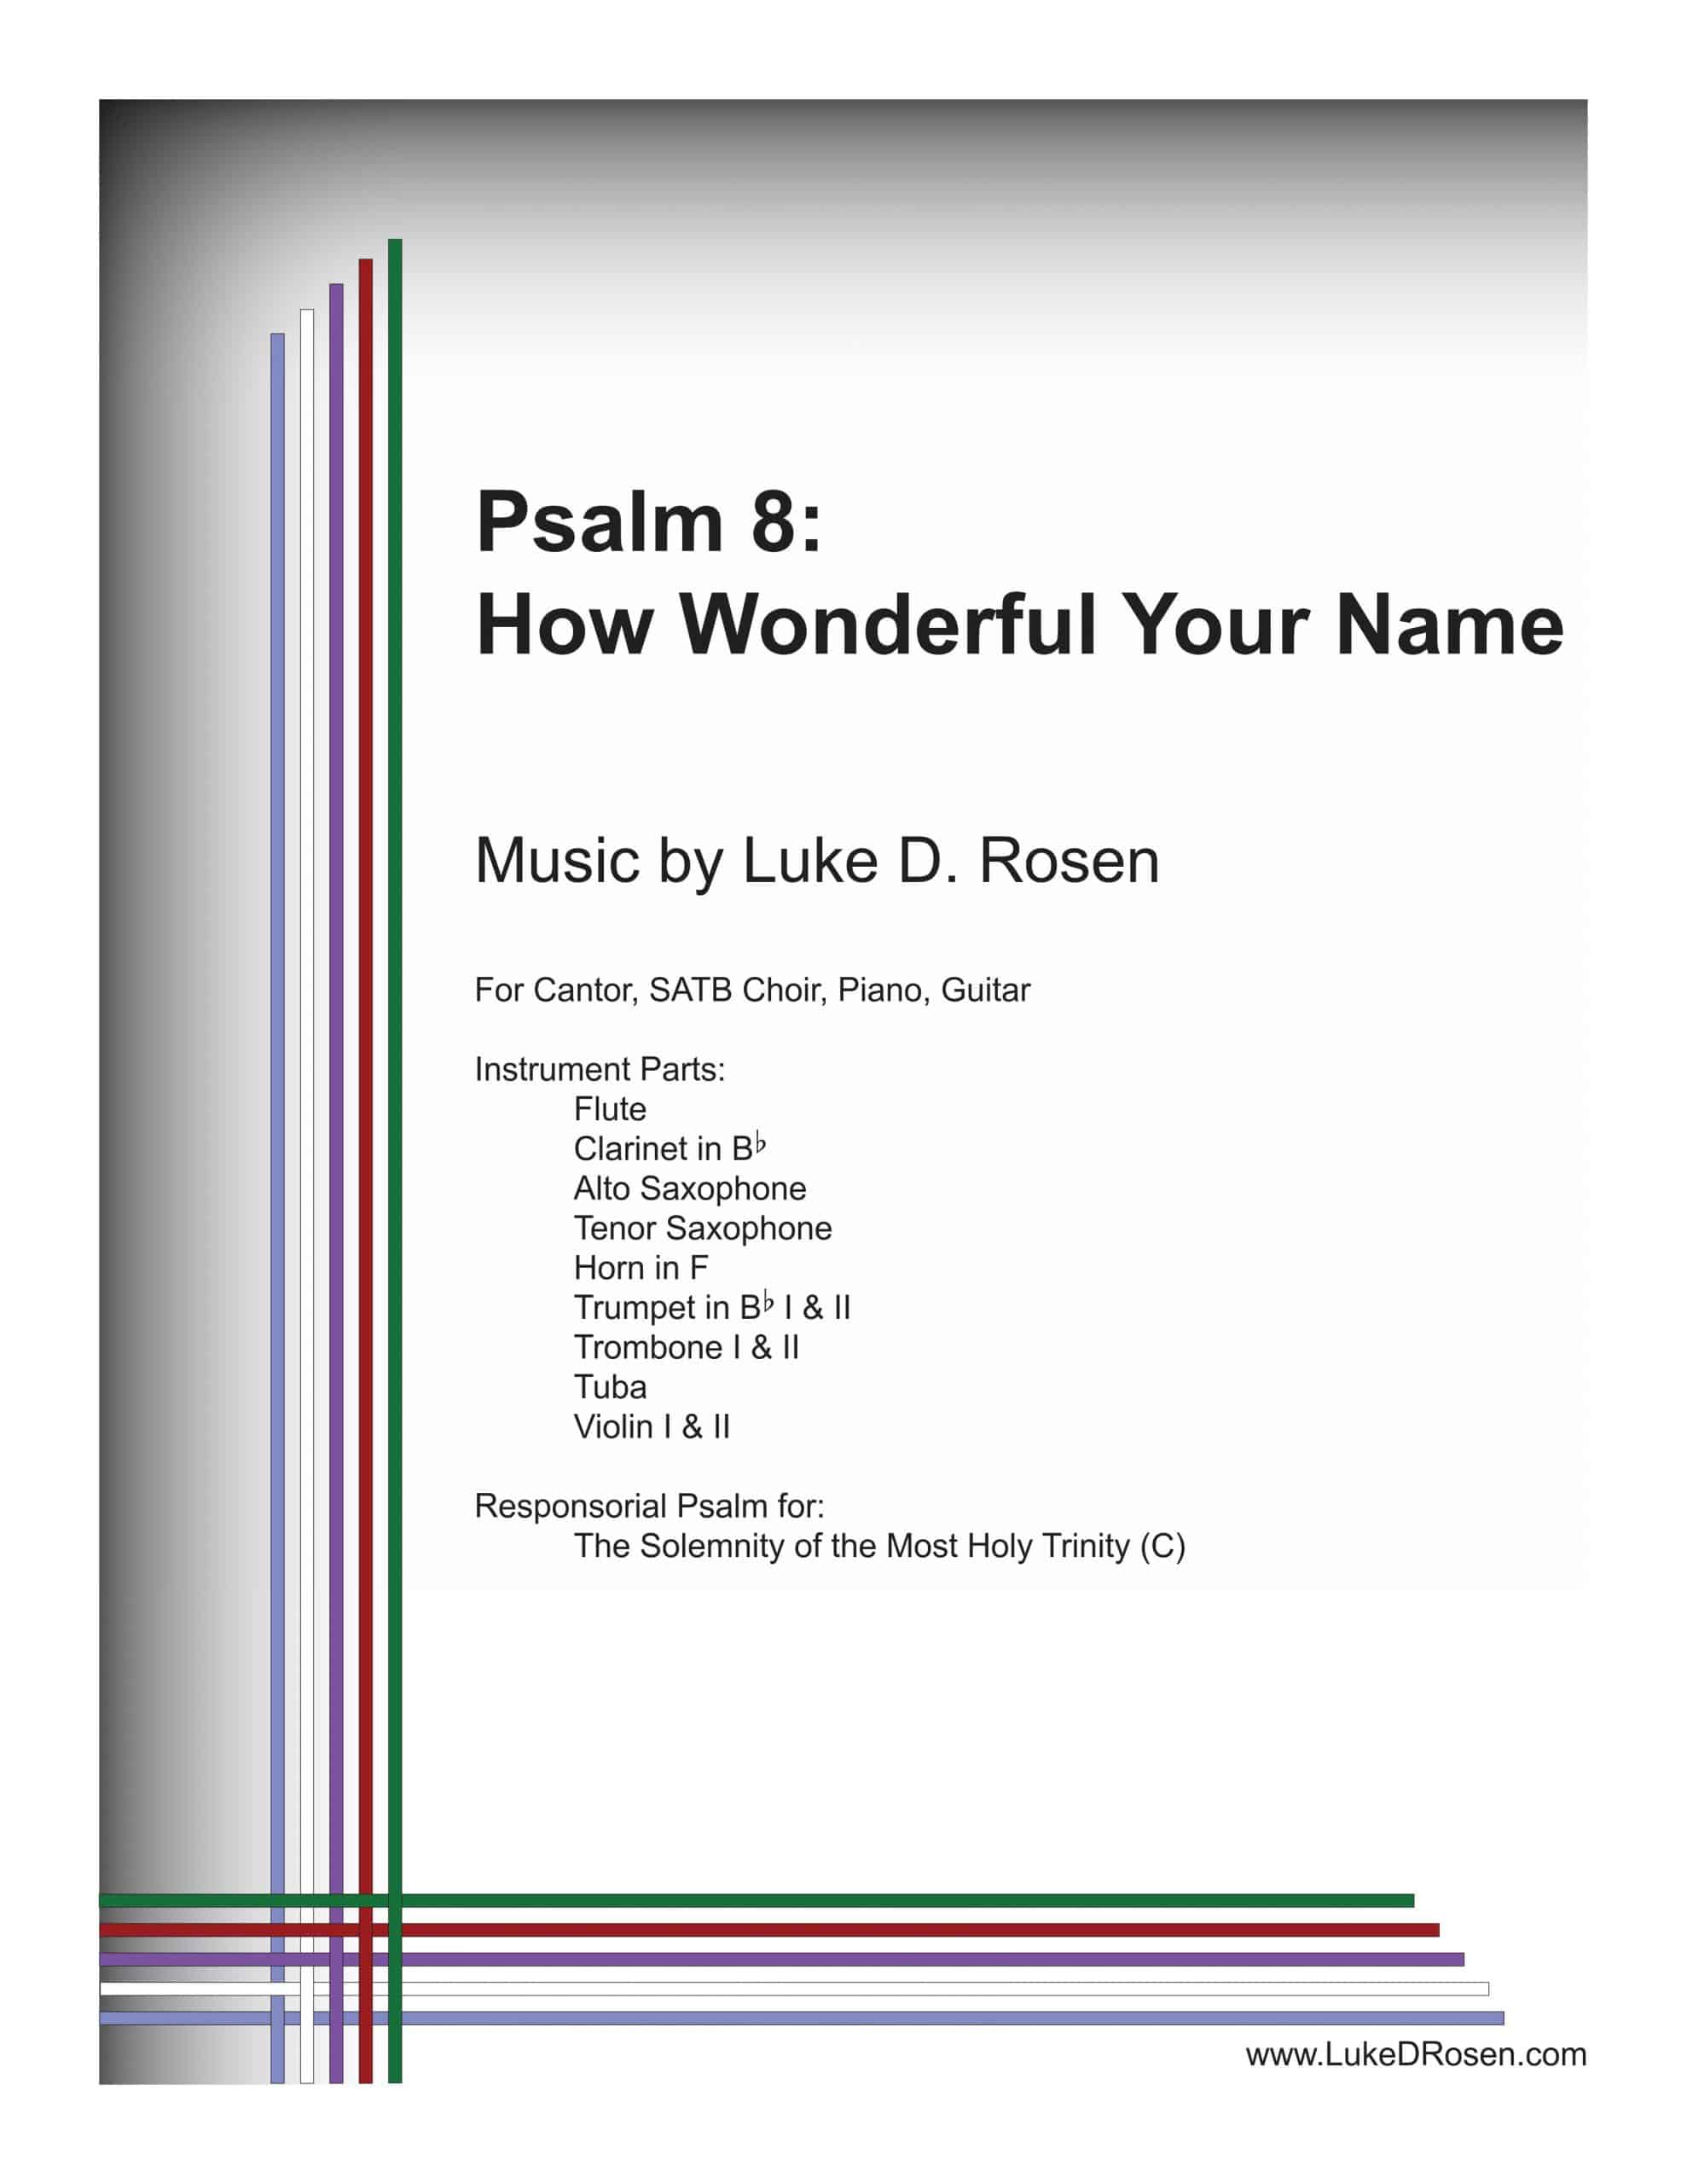 Psalm 8 – How Wonderful Your Name (Rosen)